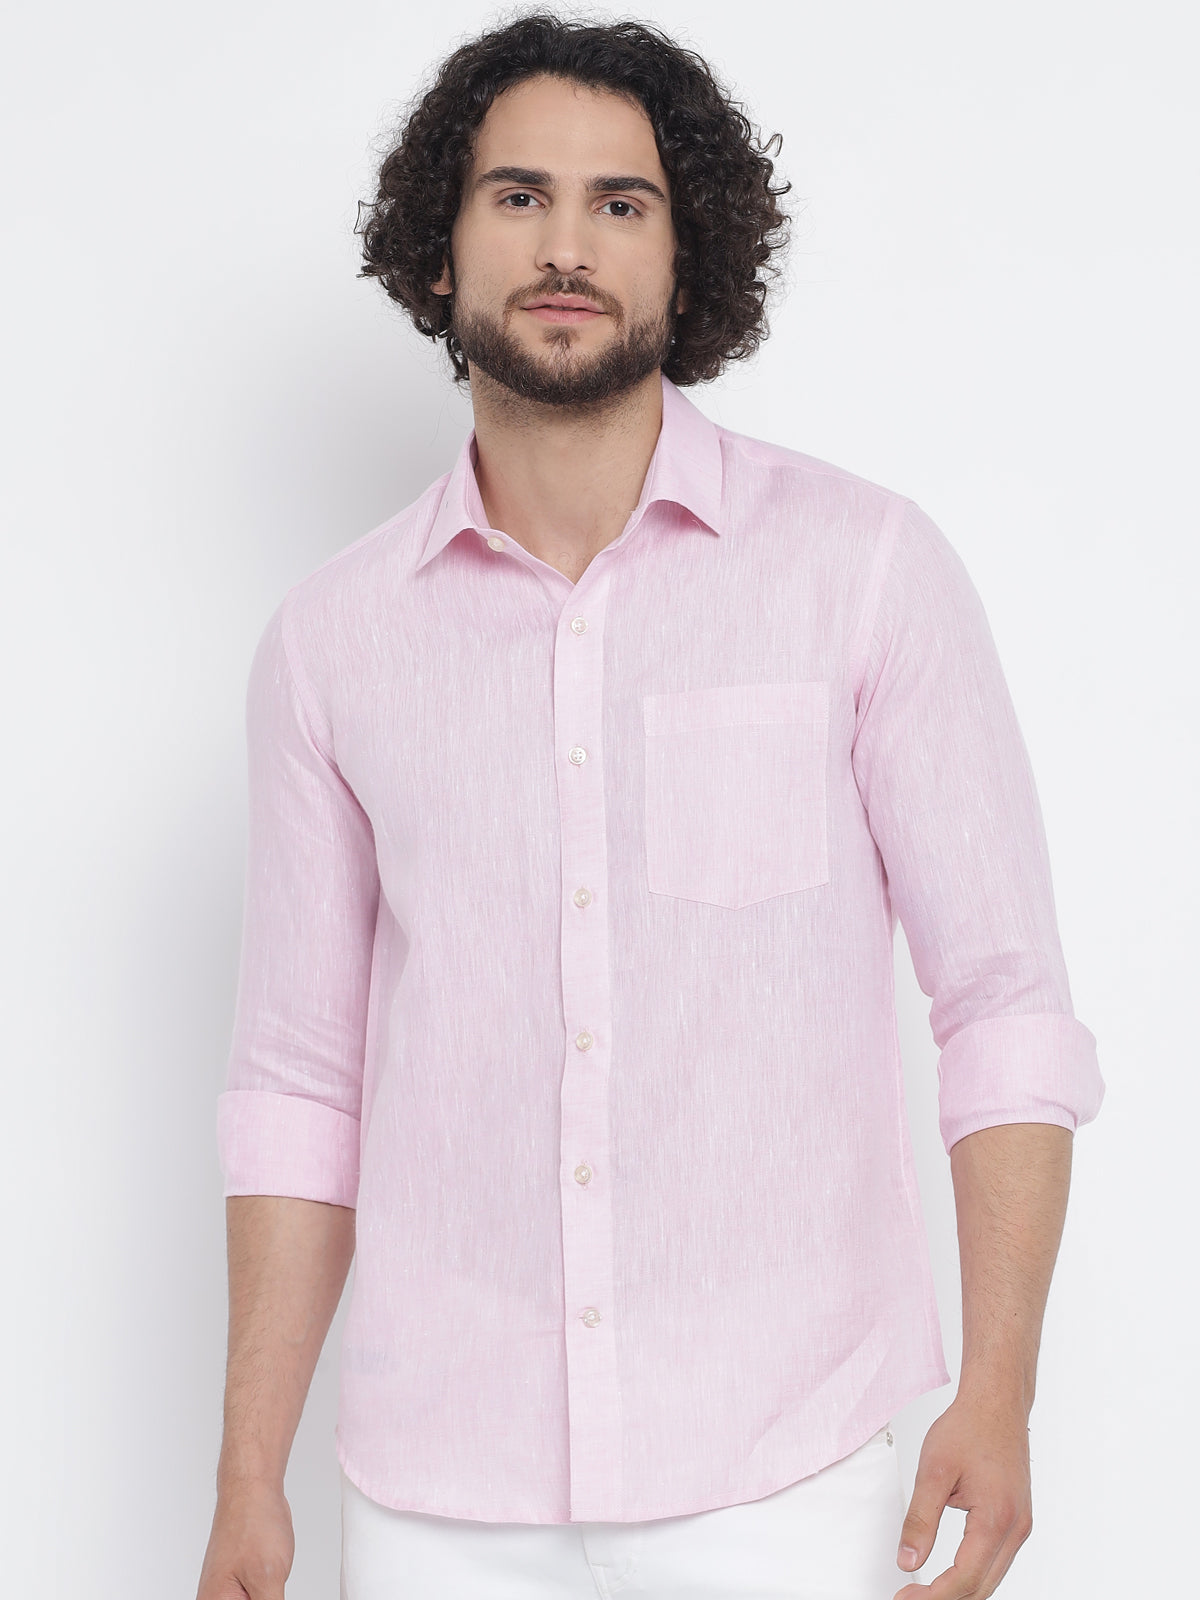 Baby Pink Colour Pure Linen Shirt For Men 4